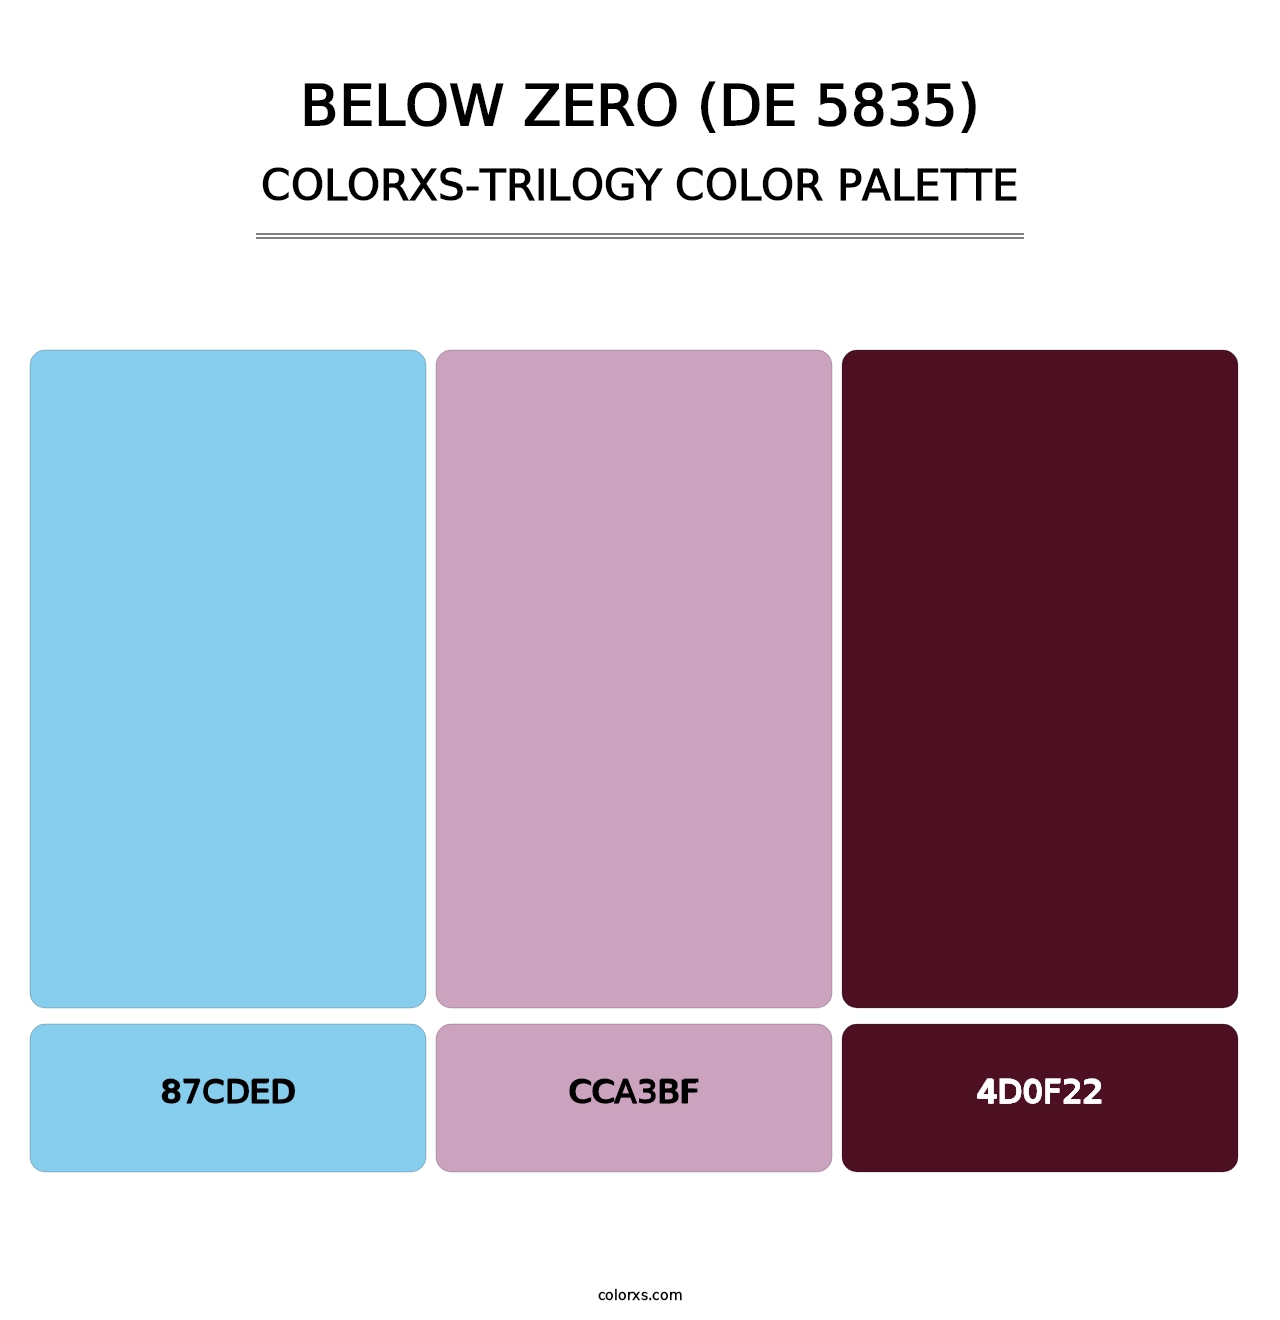 Below Zero (DE 5835) - Colorxs Trilogy Palette